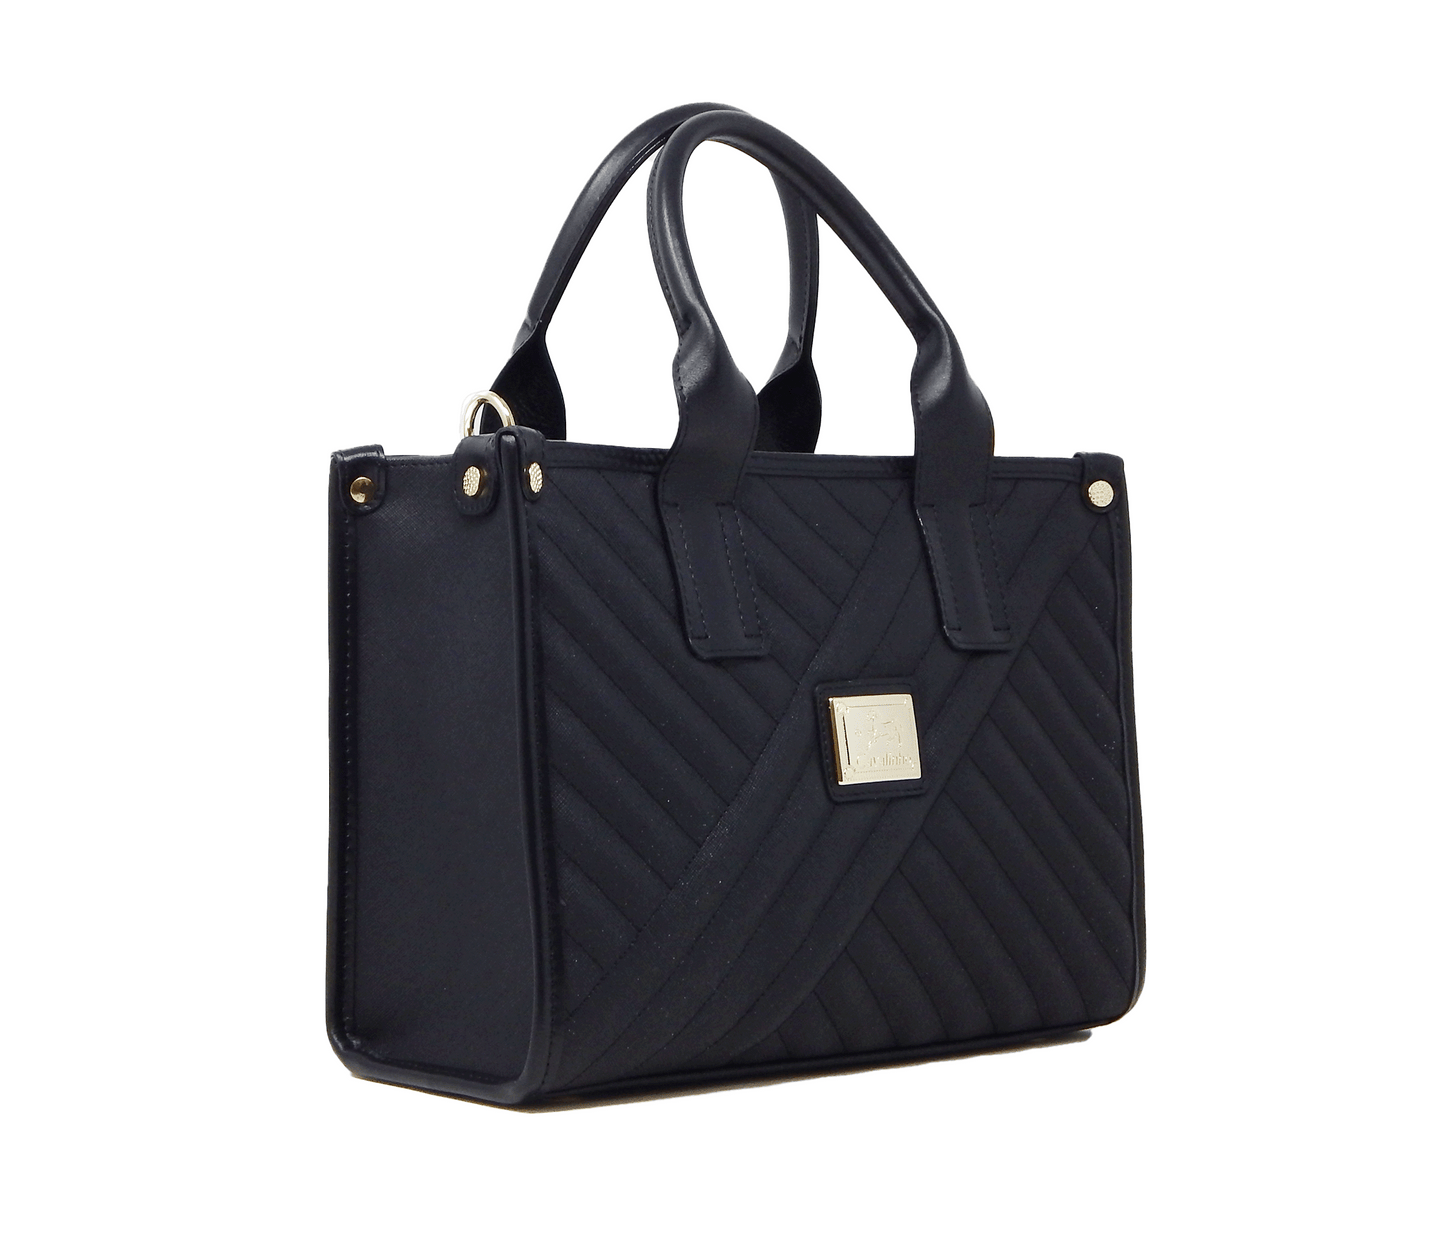 Cavalinho Charming Handbag - Black - 18470479.01_2